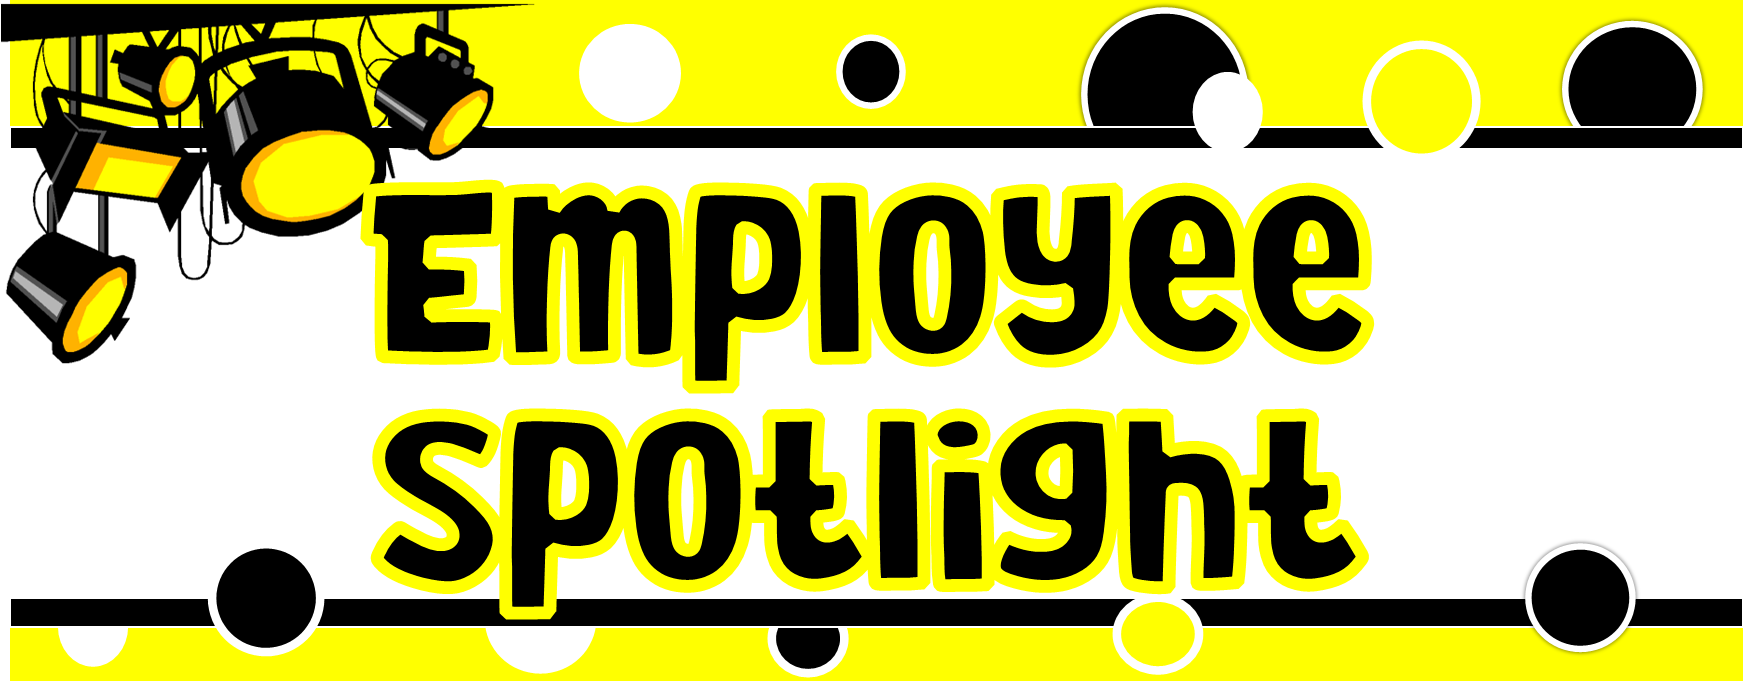 Employee Spotlight 